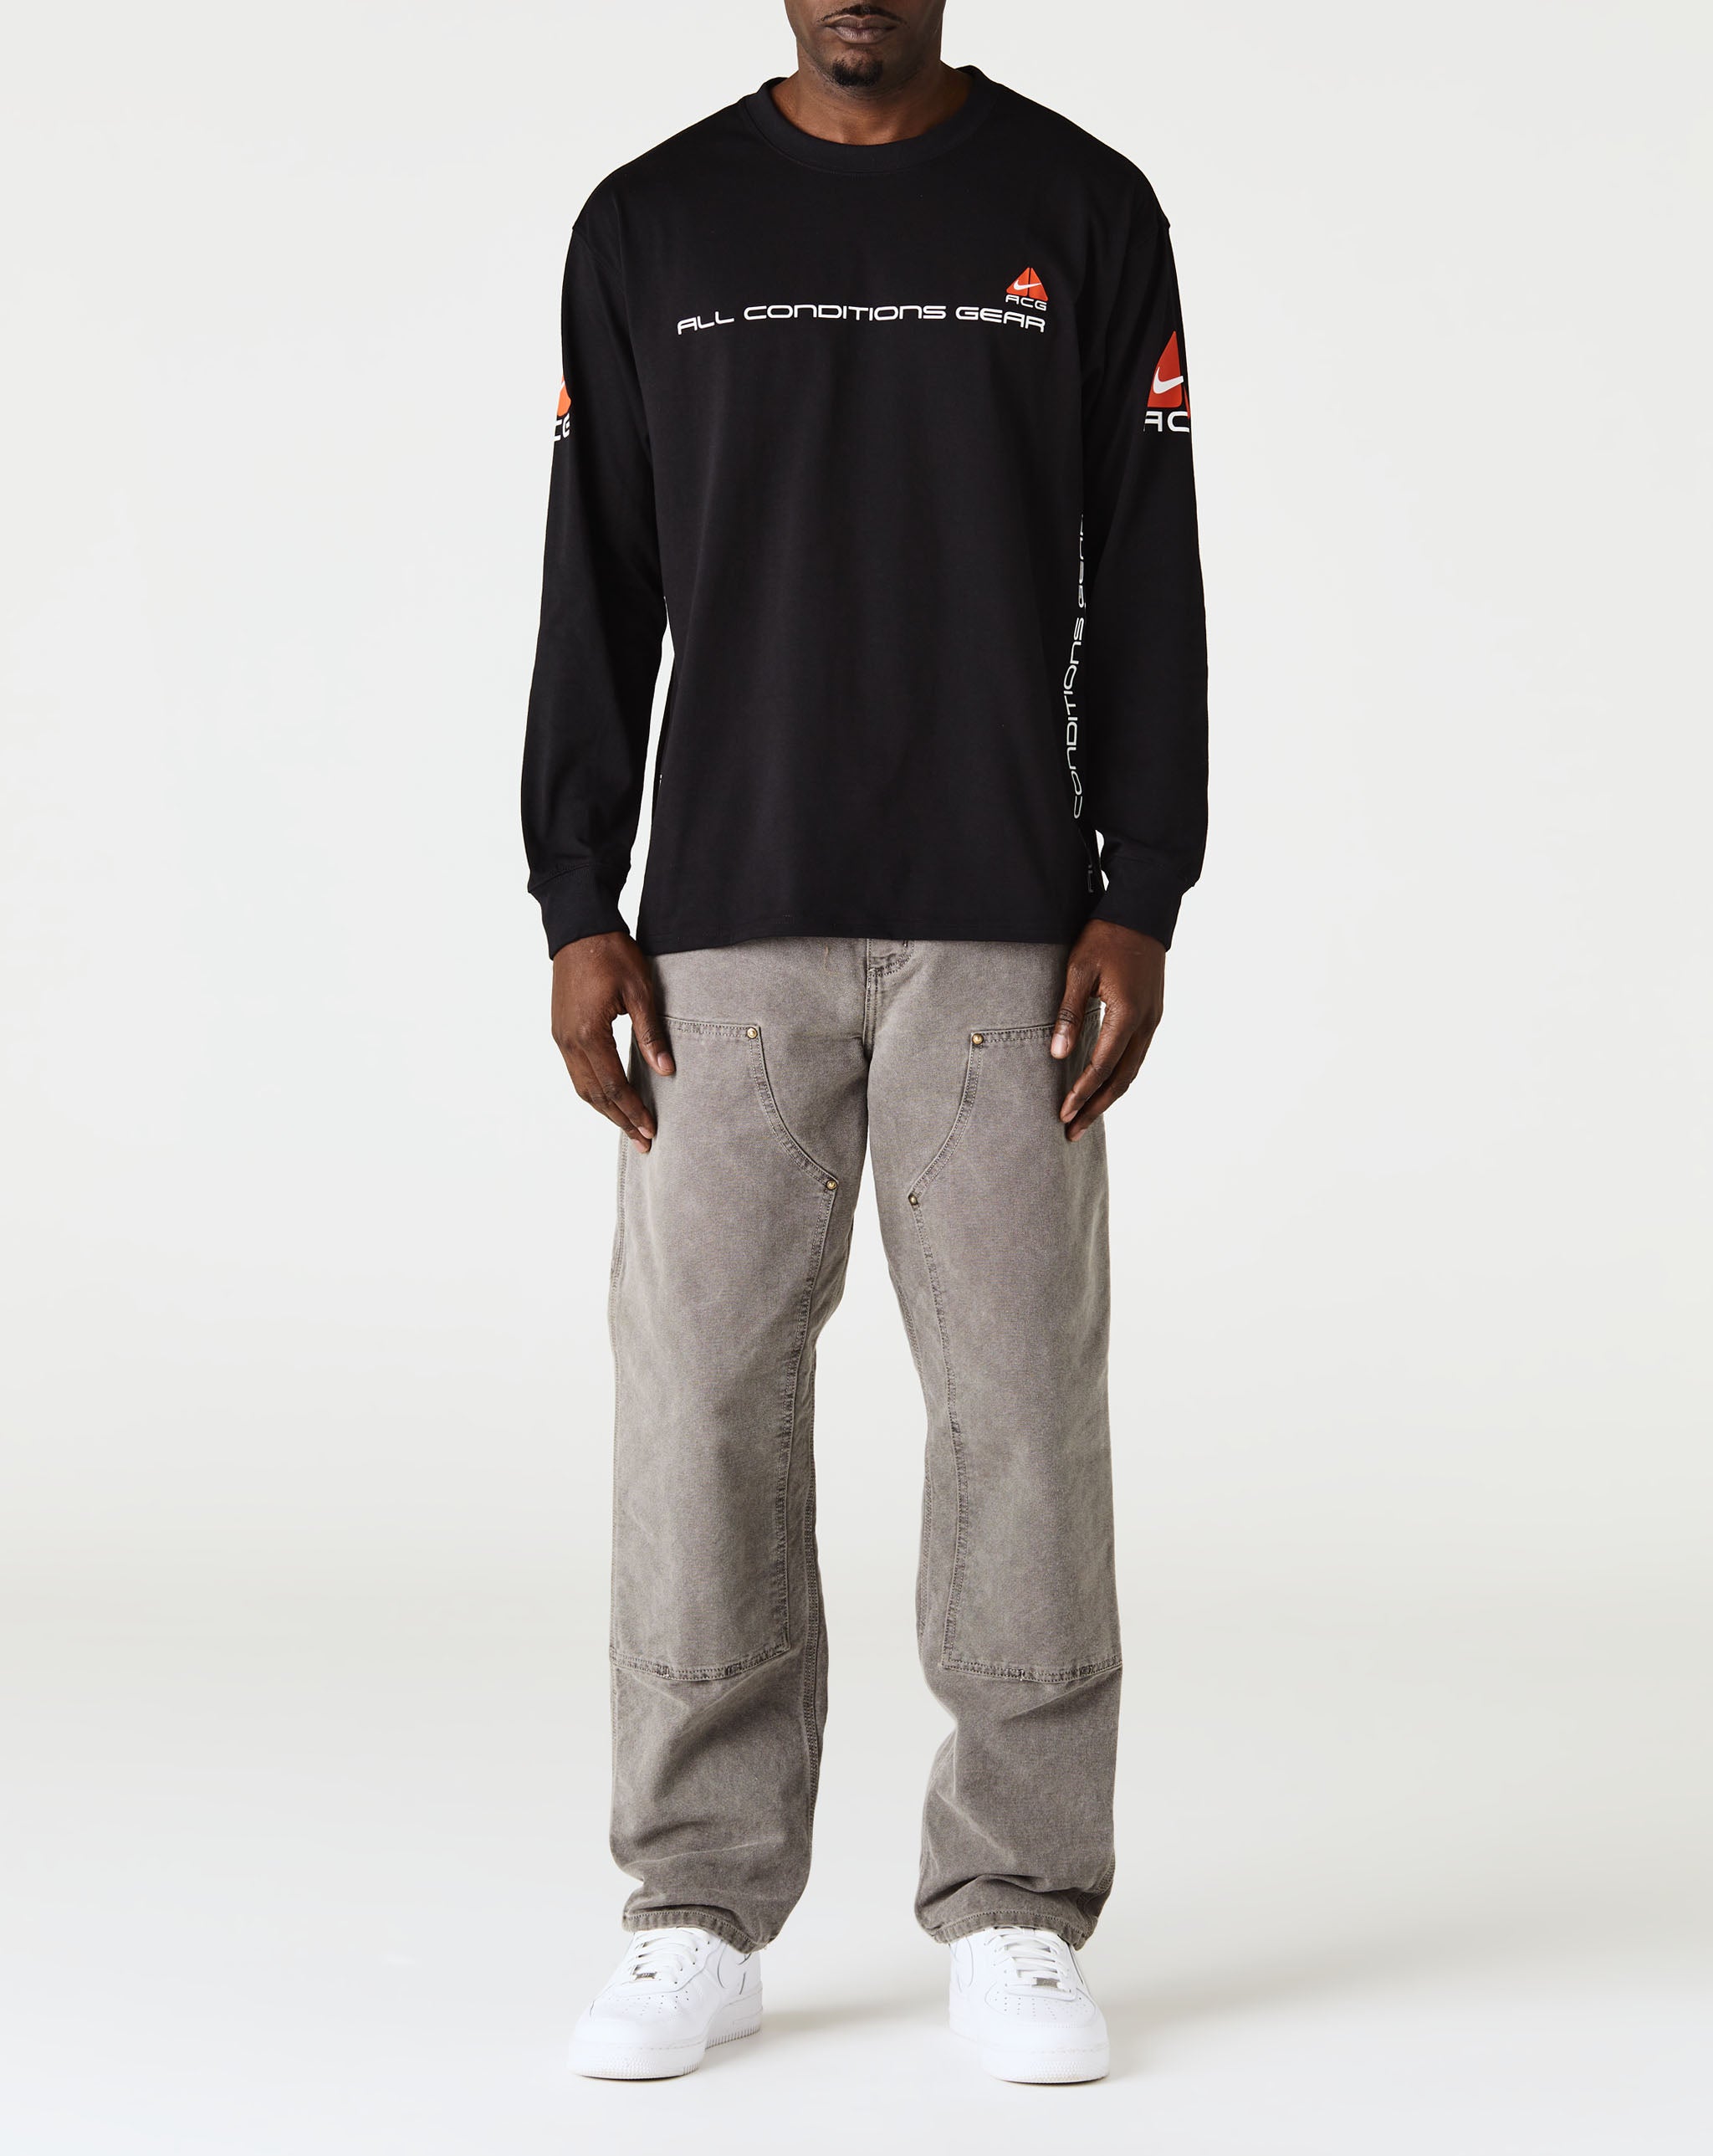 Nike ACG 'Lungs' Long-Sleeve T-Shirt  - XHIBITION